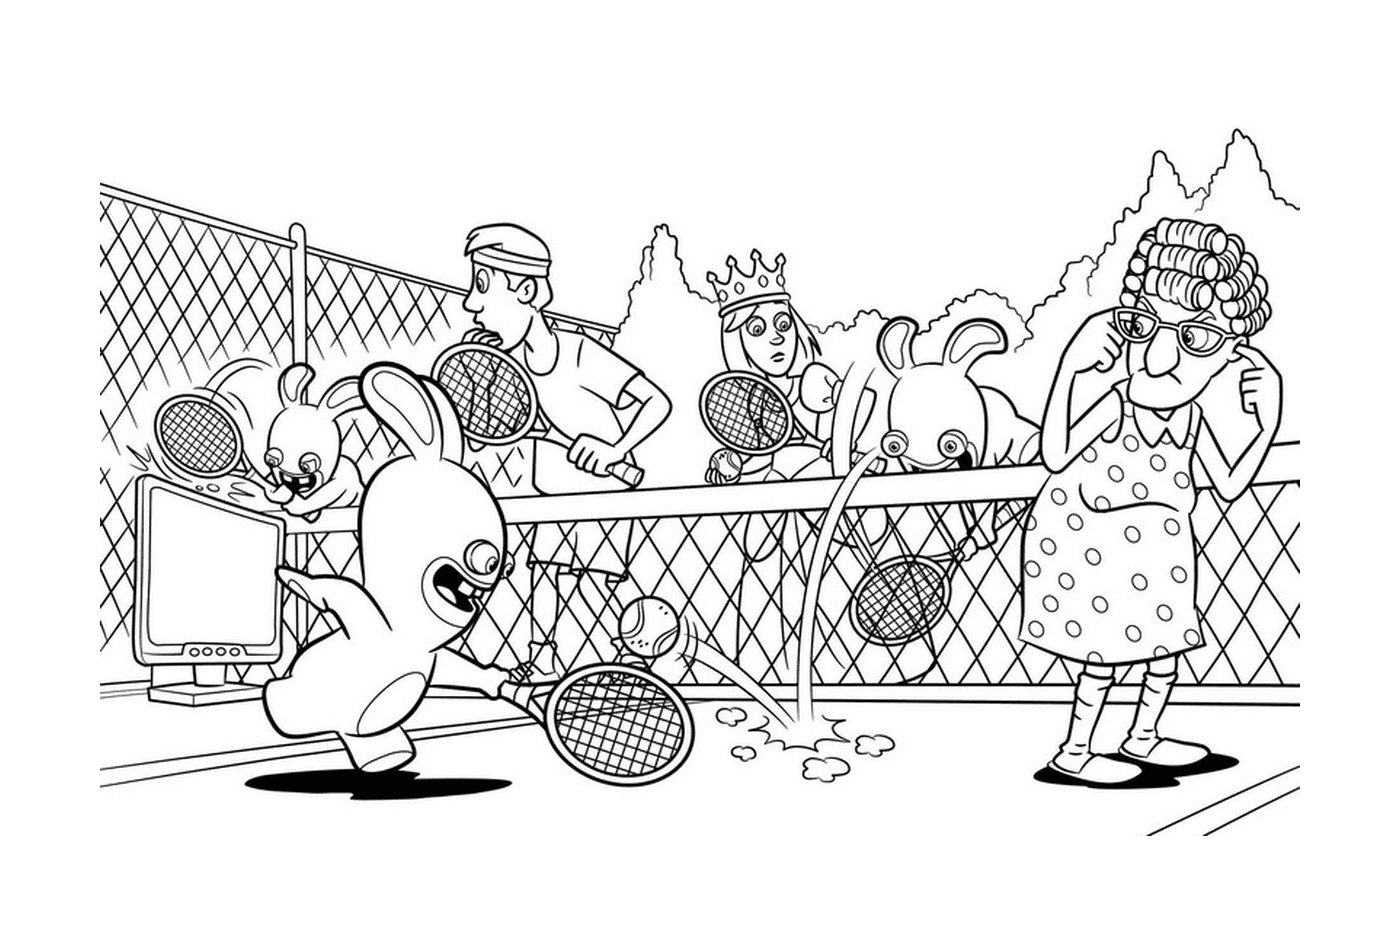  Rabbits Cretins play tennis 